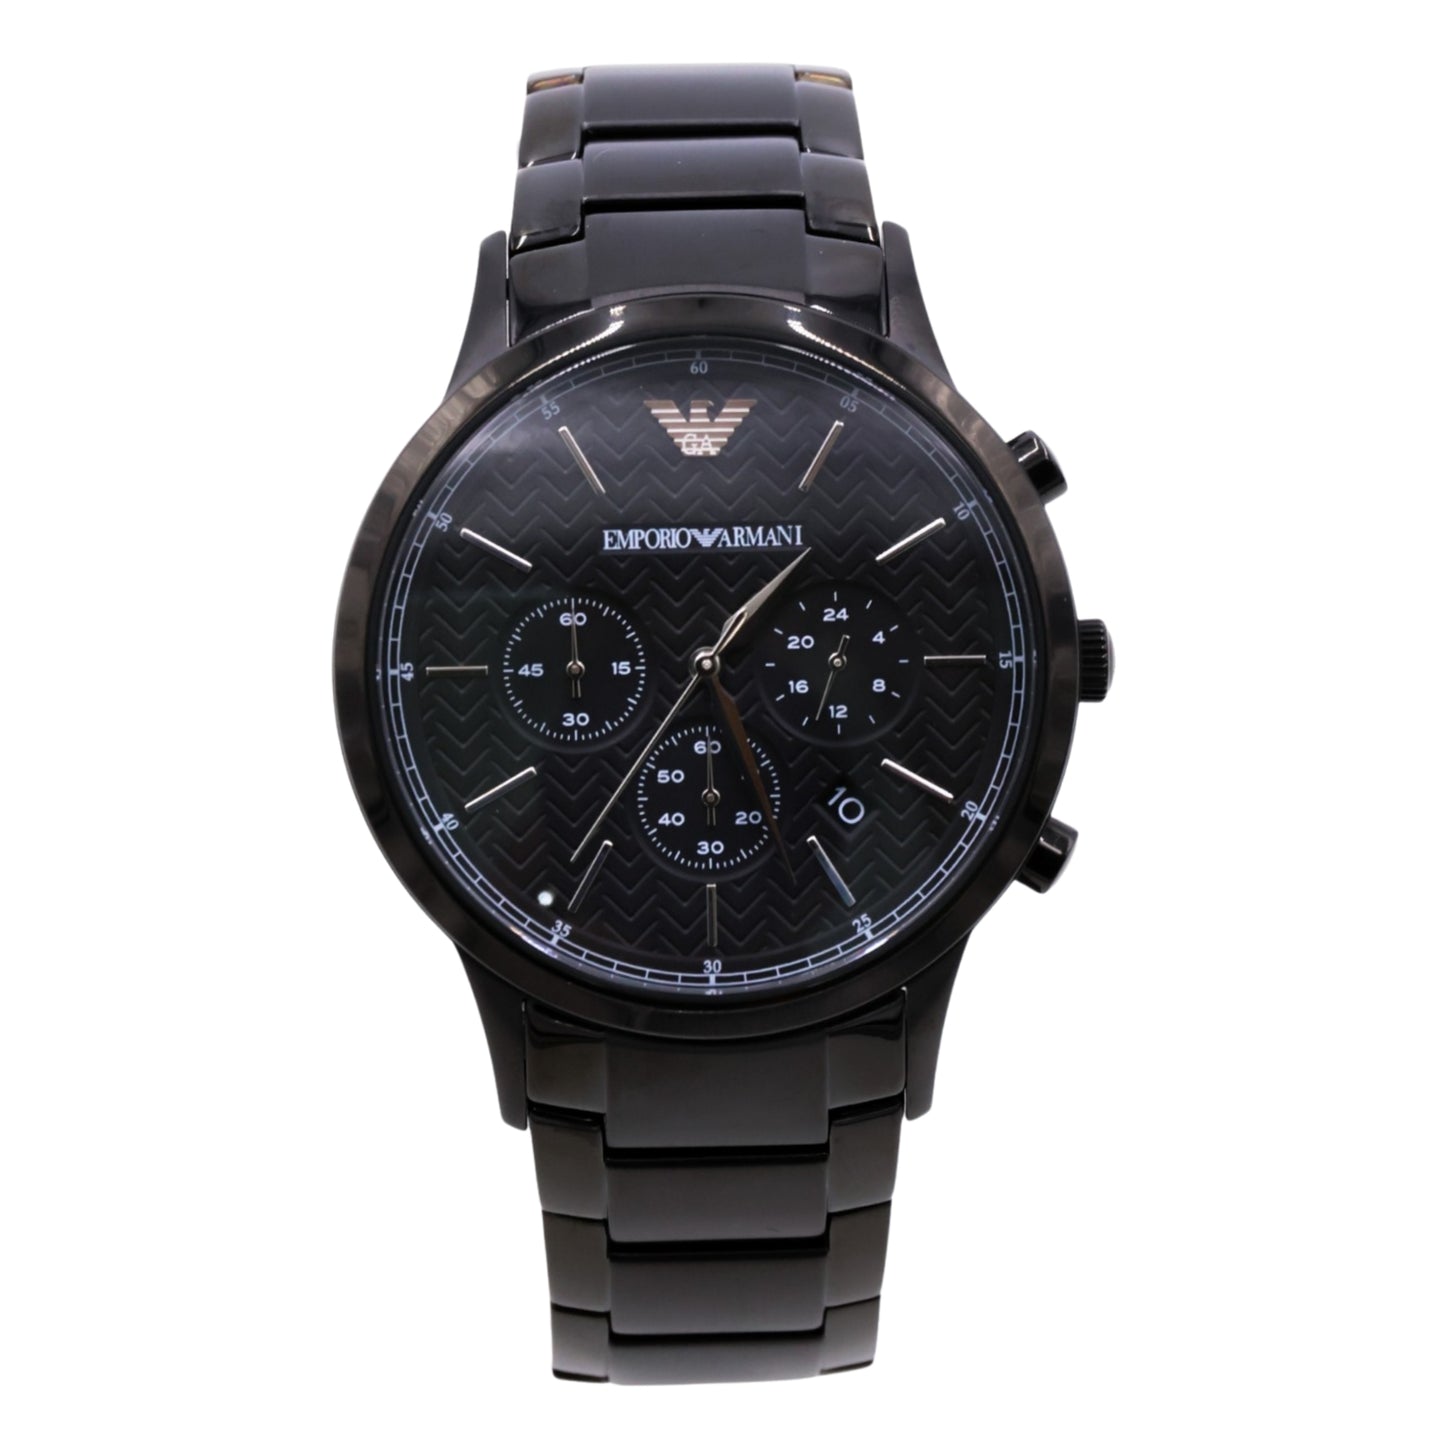 Emporio Armani Men's Black Dress Watch with Quartz Movement - AR2485